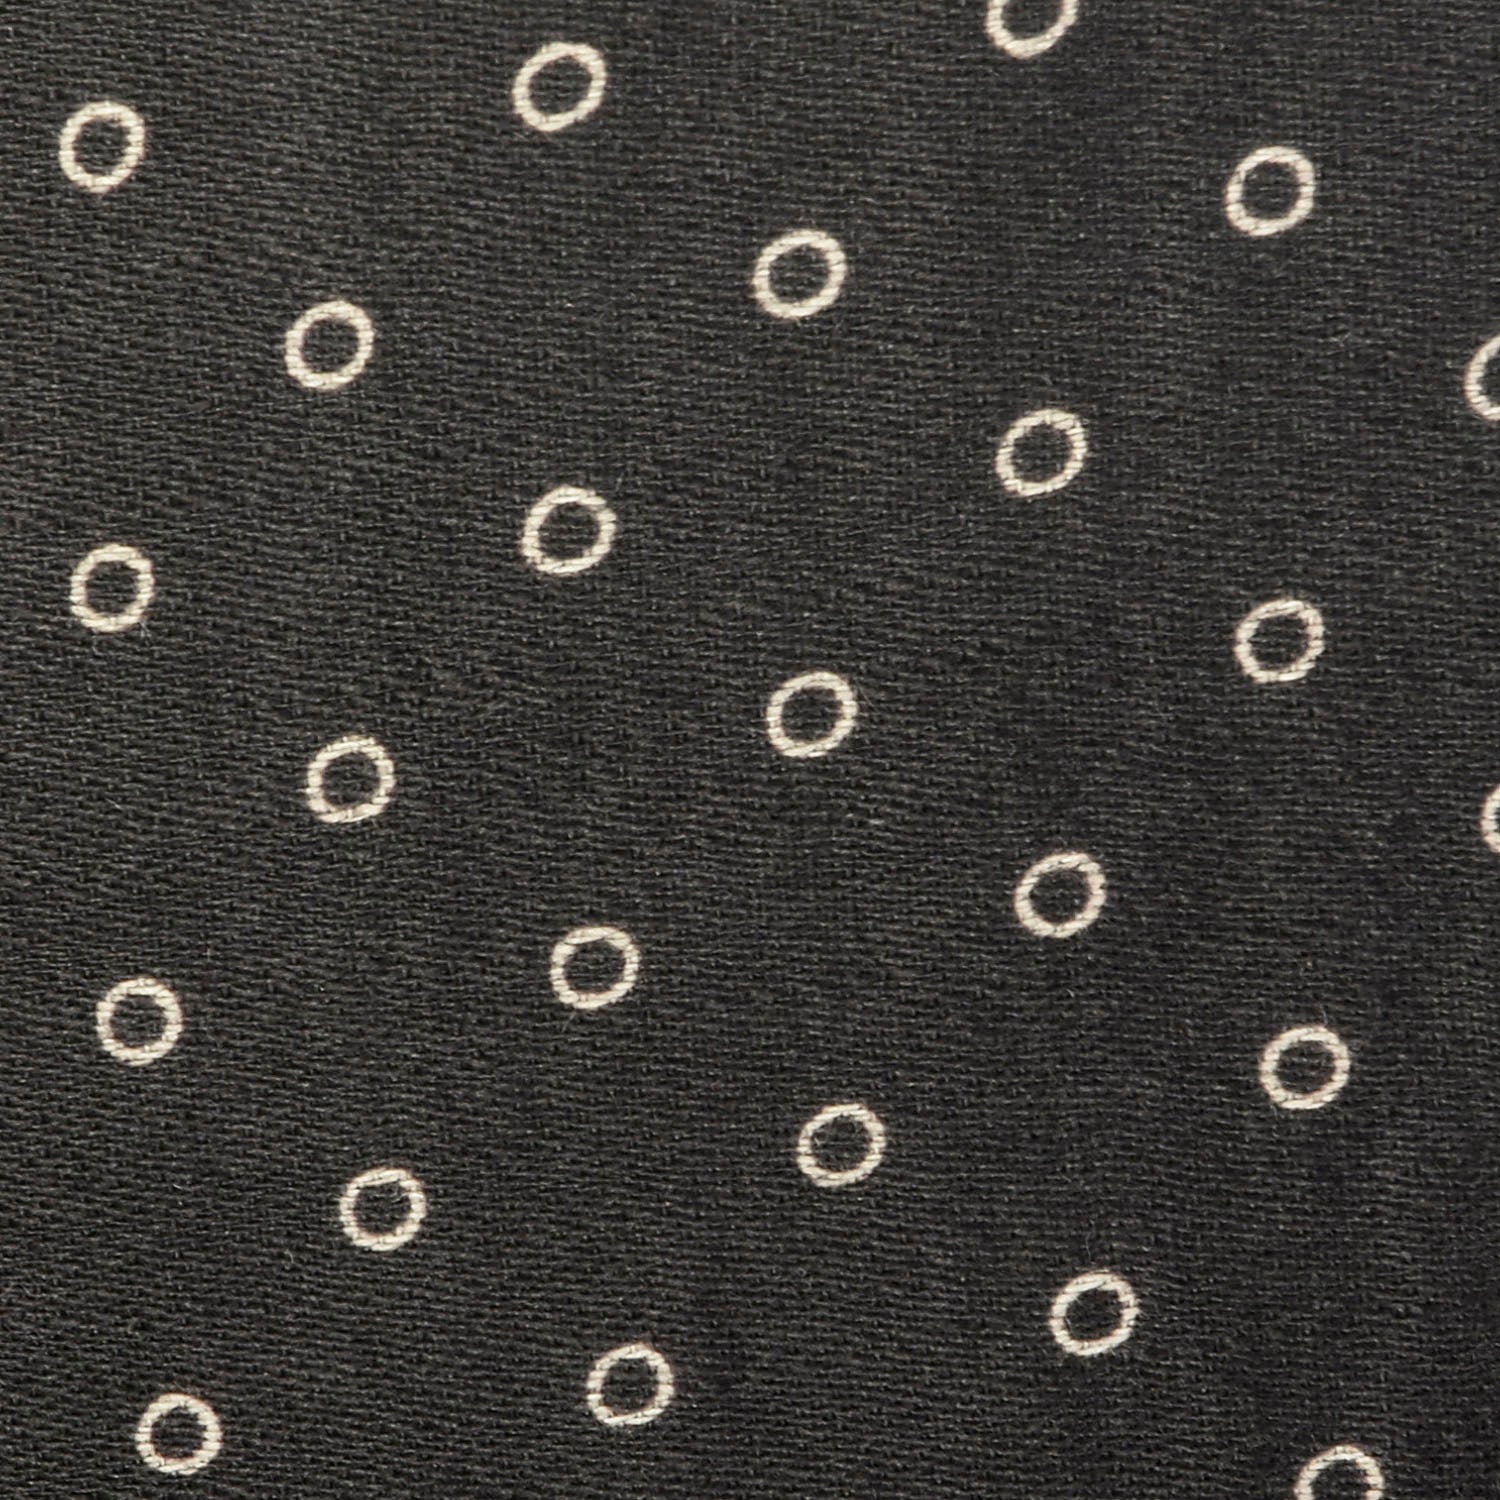 Small Maxi Skirt Black Edwardian Cotton Circle Print